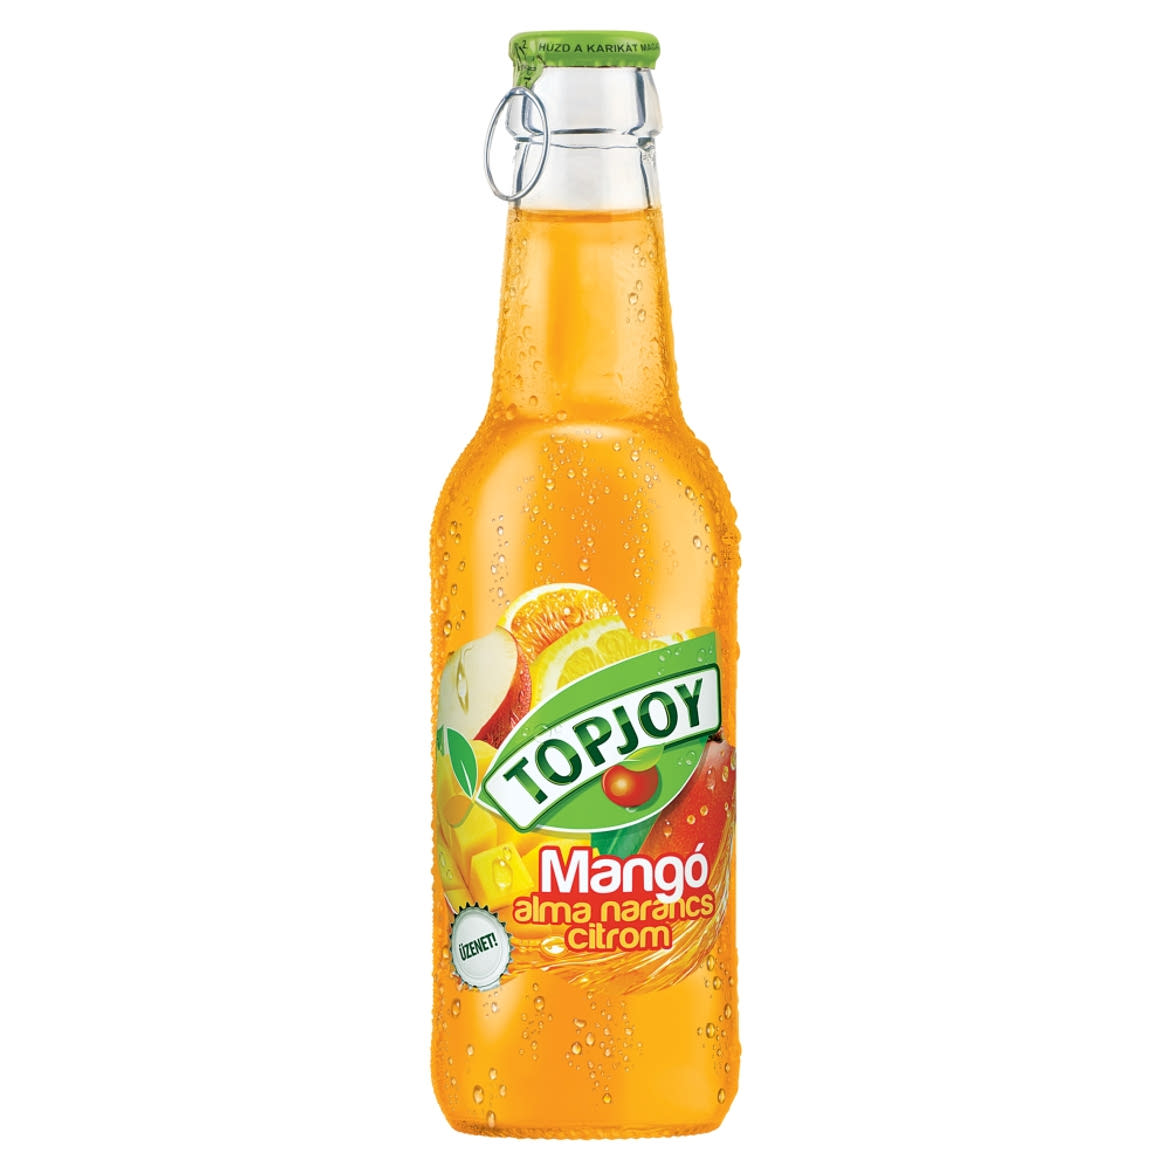 Topjoy mangó-alma-narancs-citrom ital